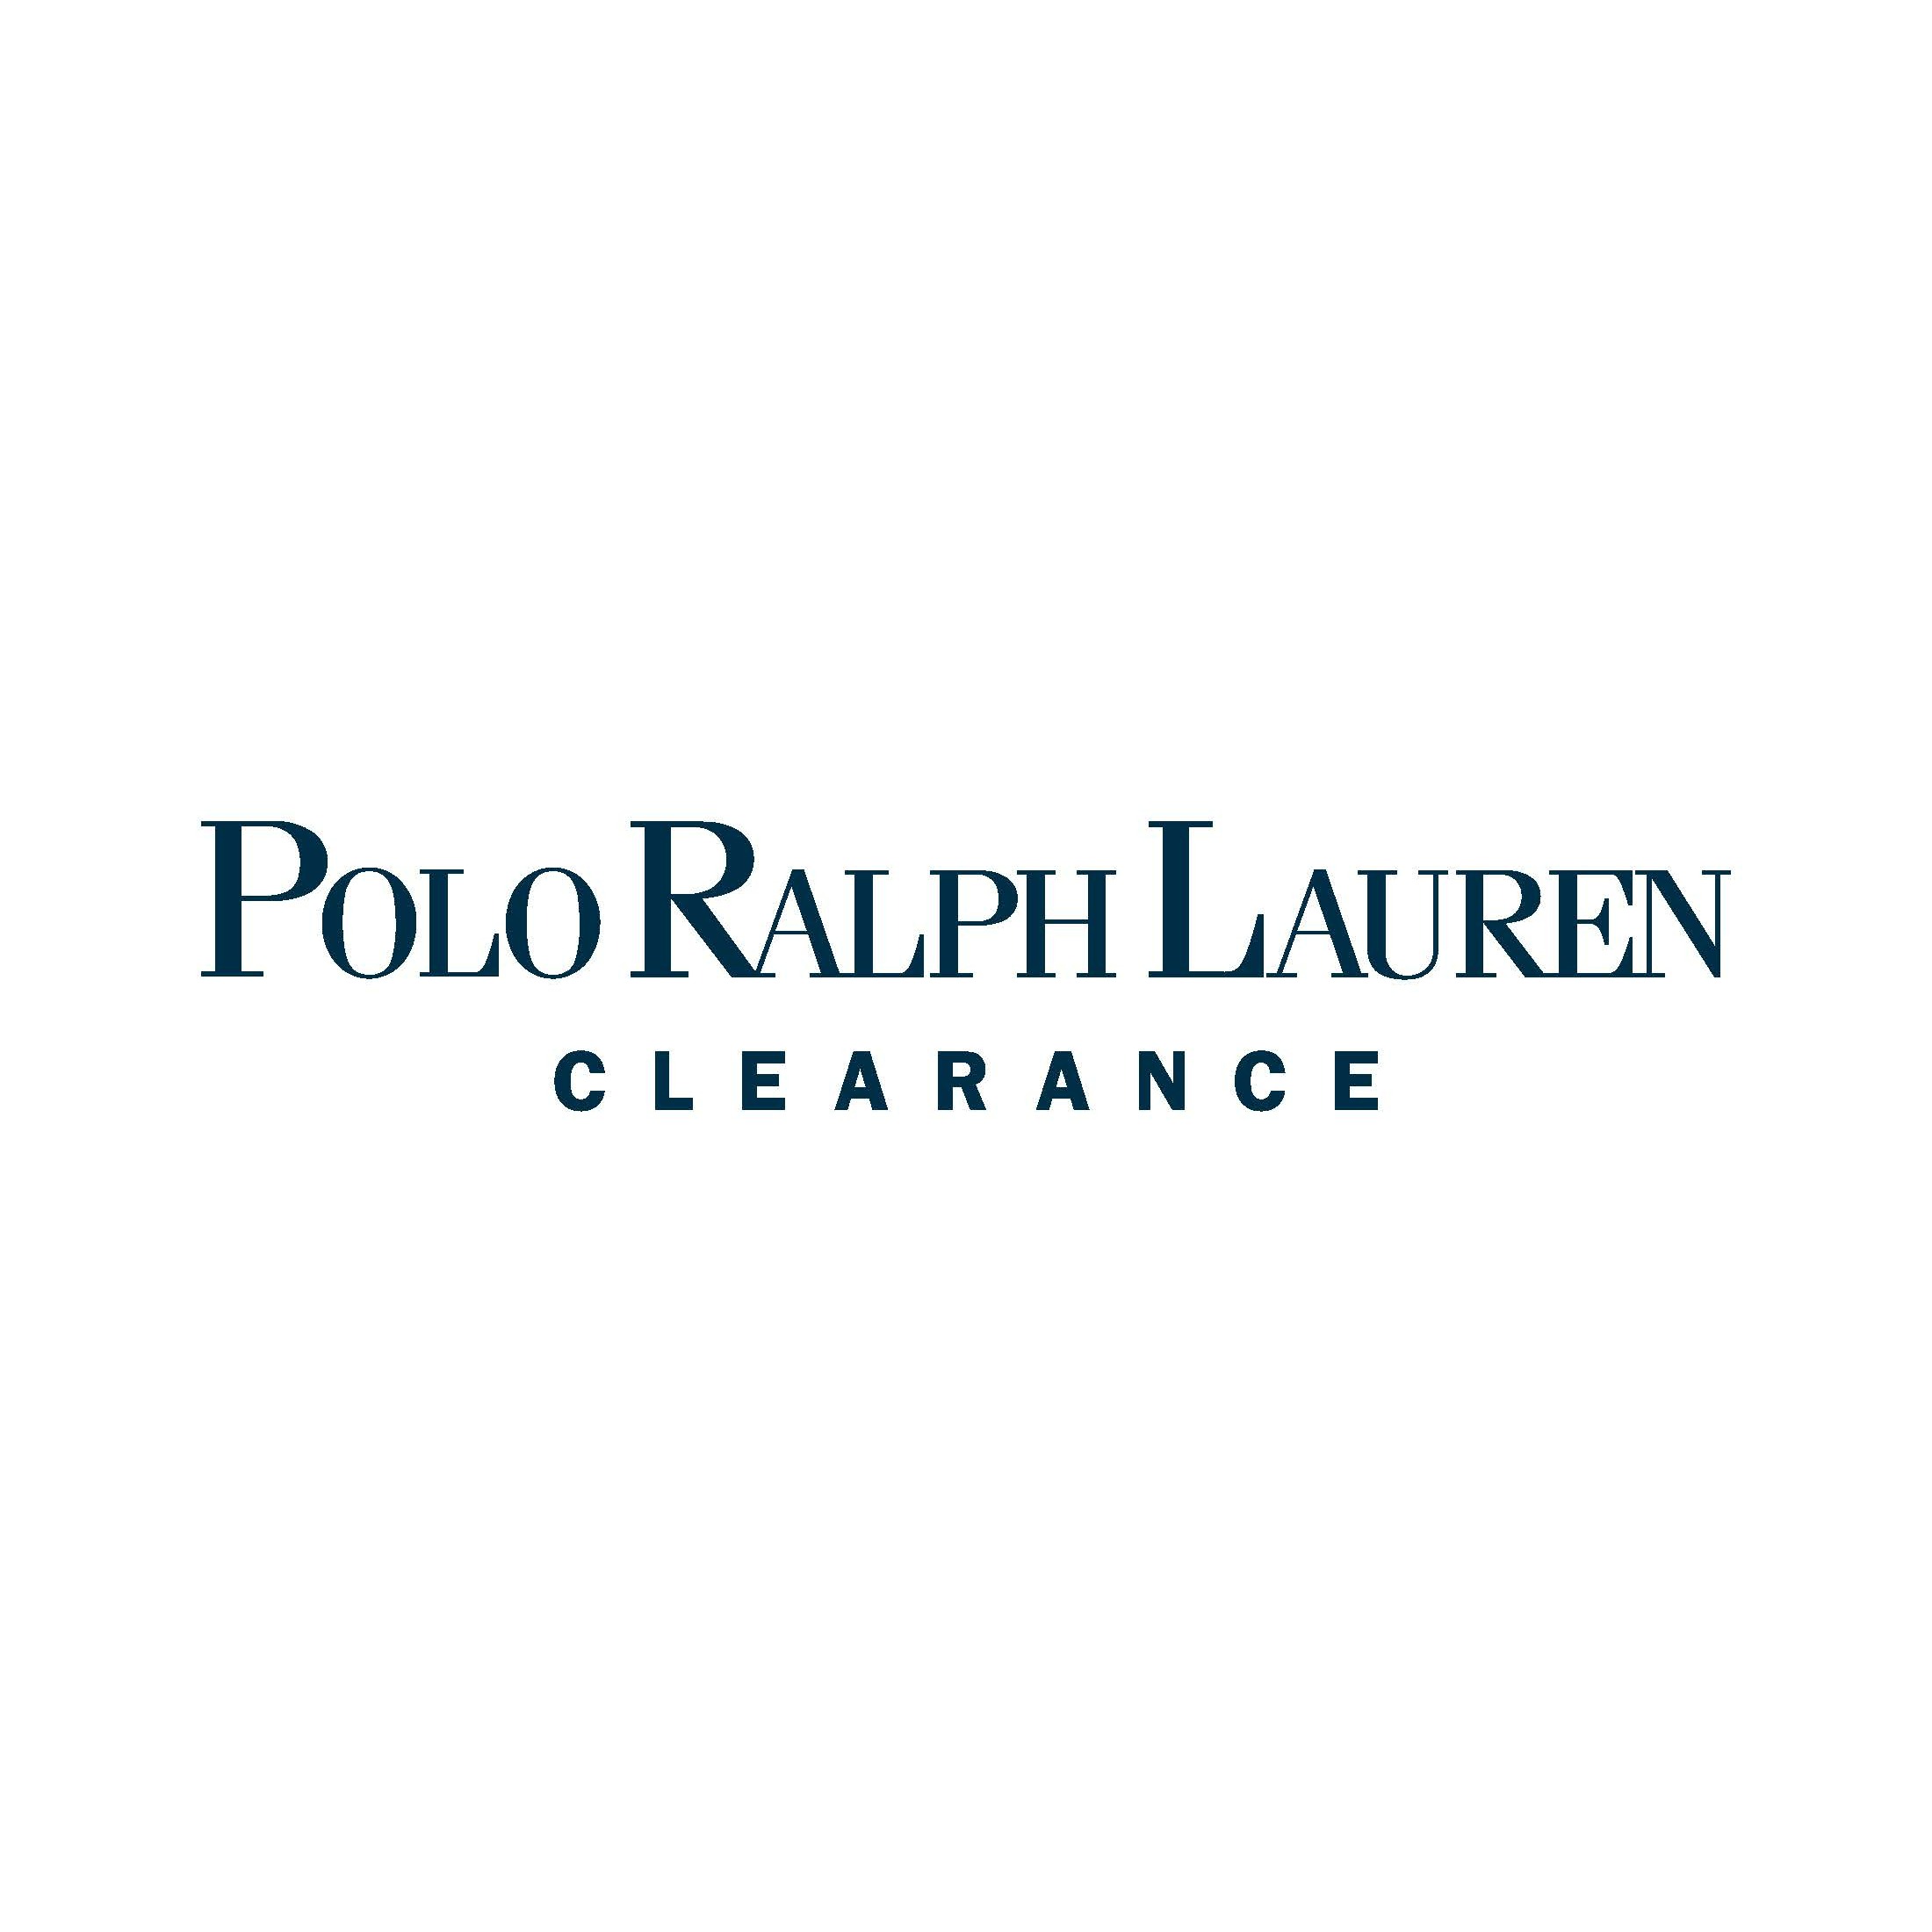 POLO RALPH LAUREN - 5220 Fashion Outlets Way, Rosemont, Illinois